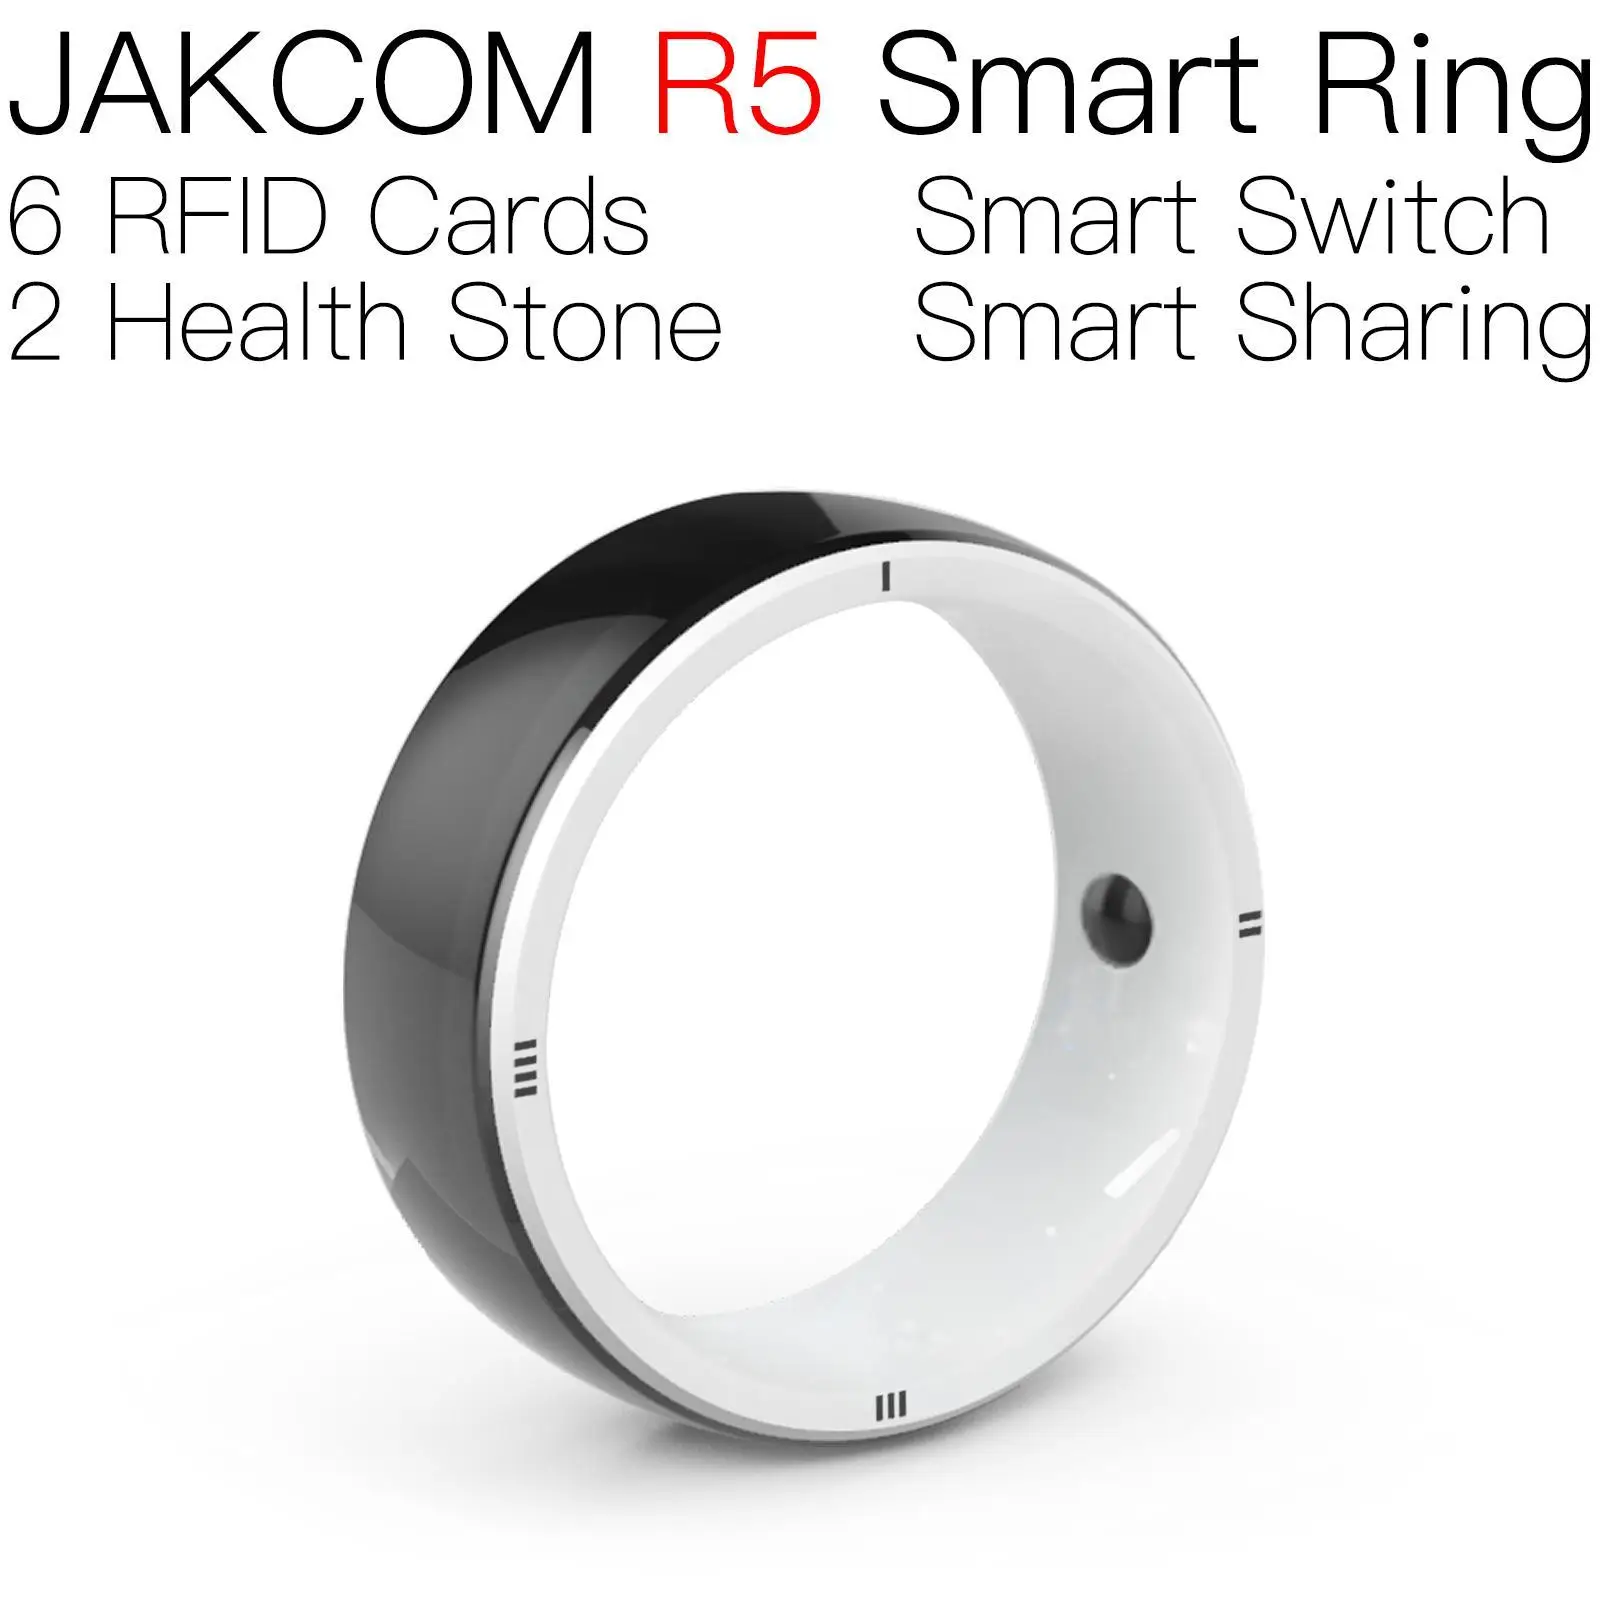 

JAKCOM R5 Smart Ring Nice than anti metal uid sticker yuotube premium id card nfc classic 1k writable gift micro rfid